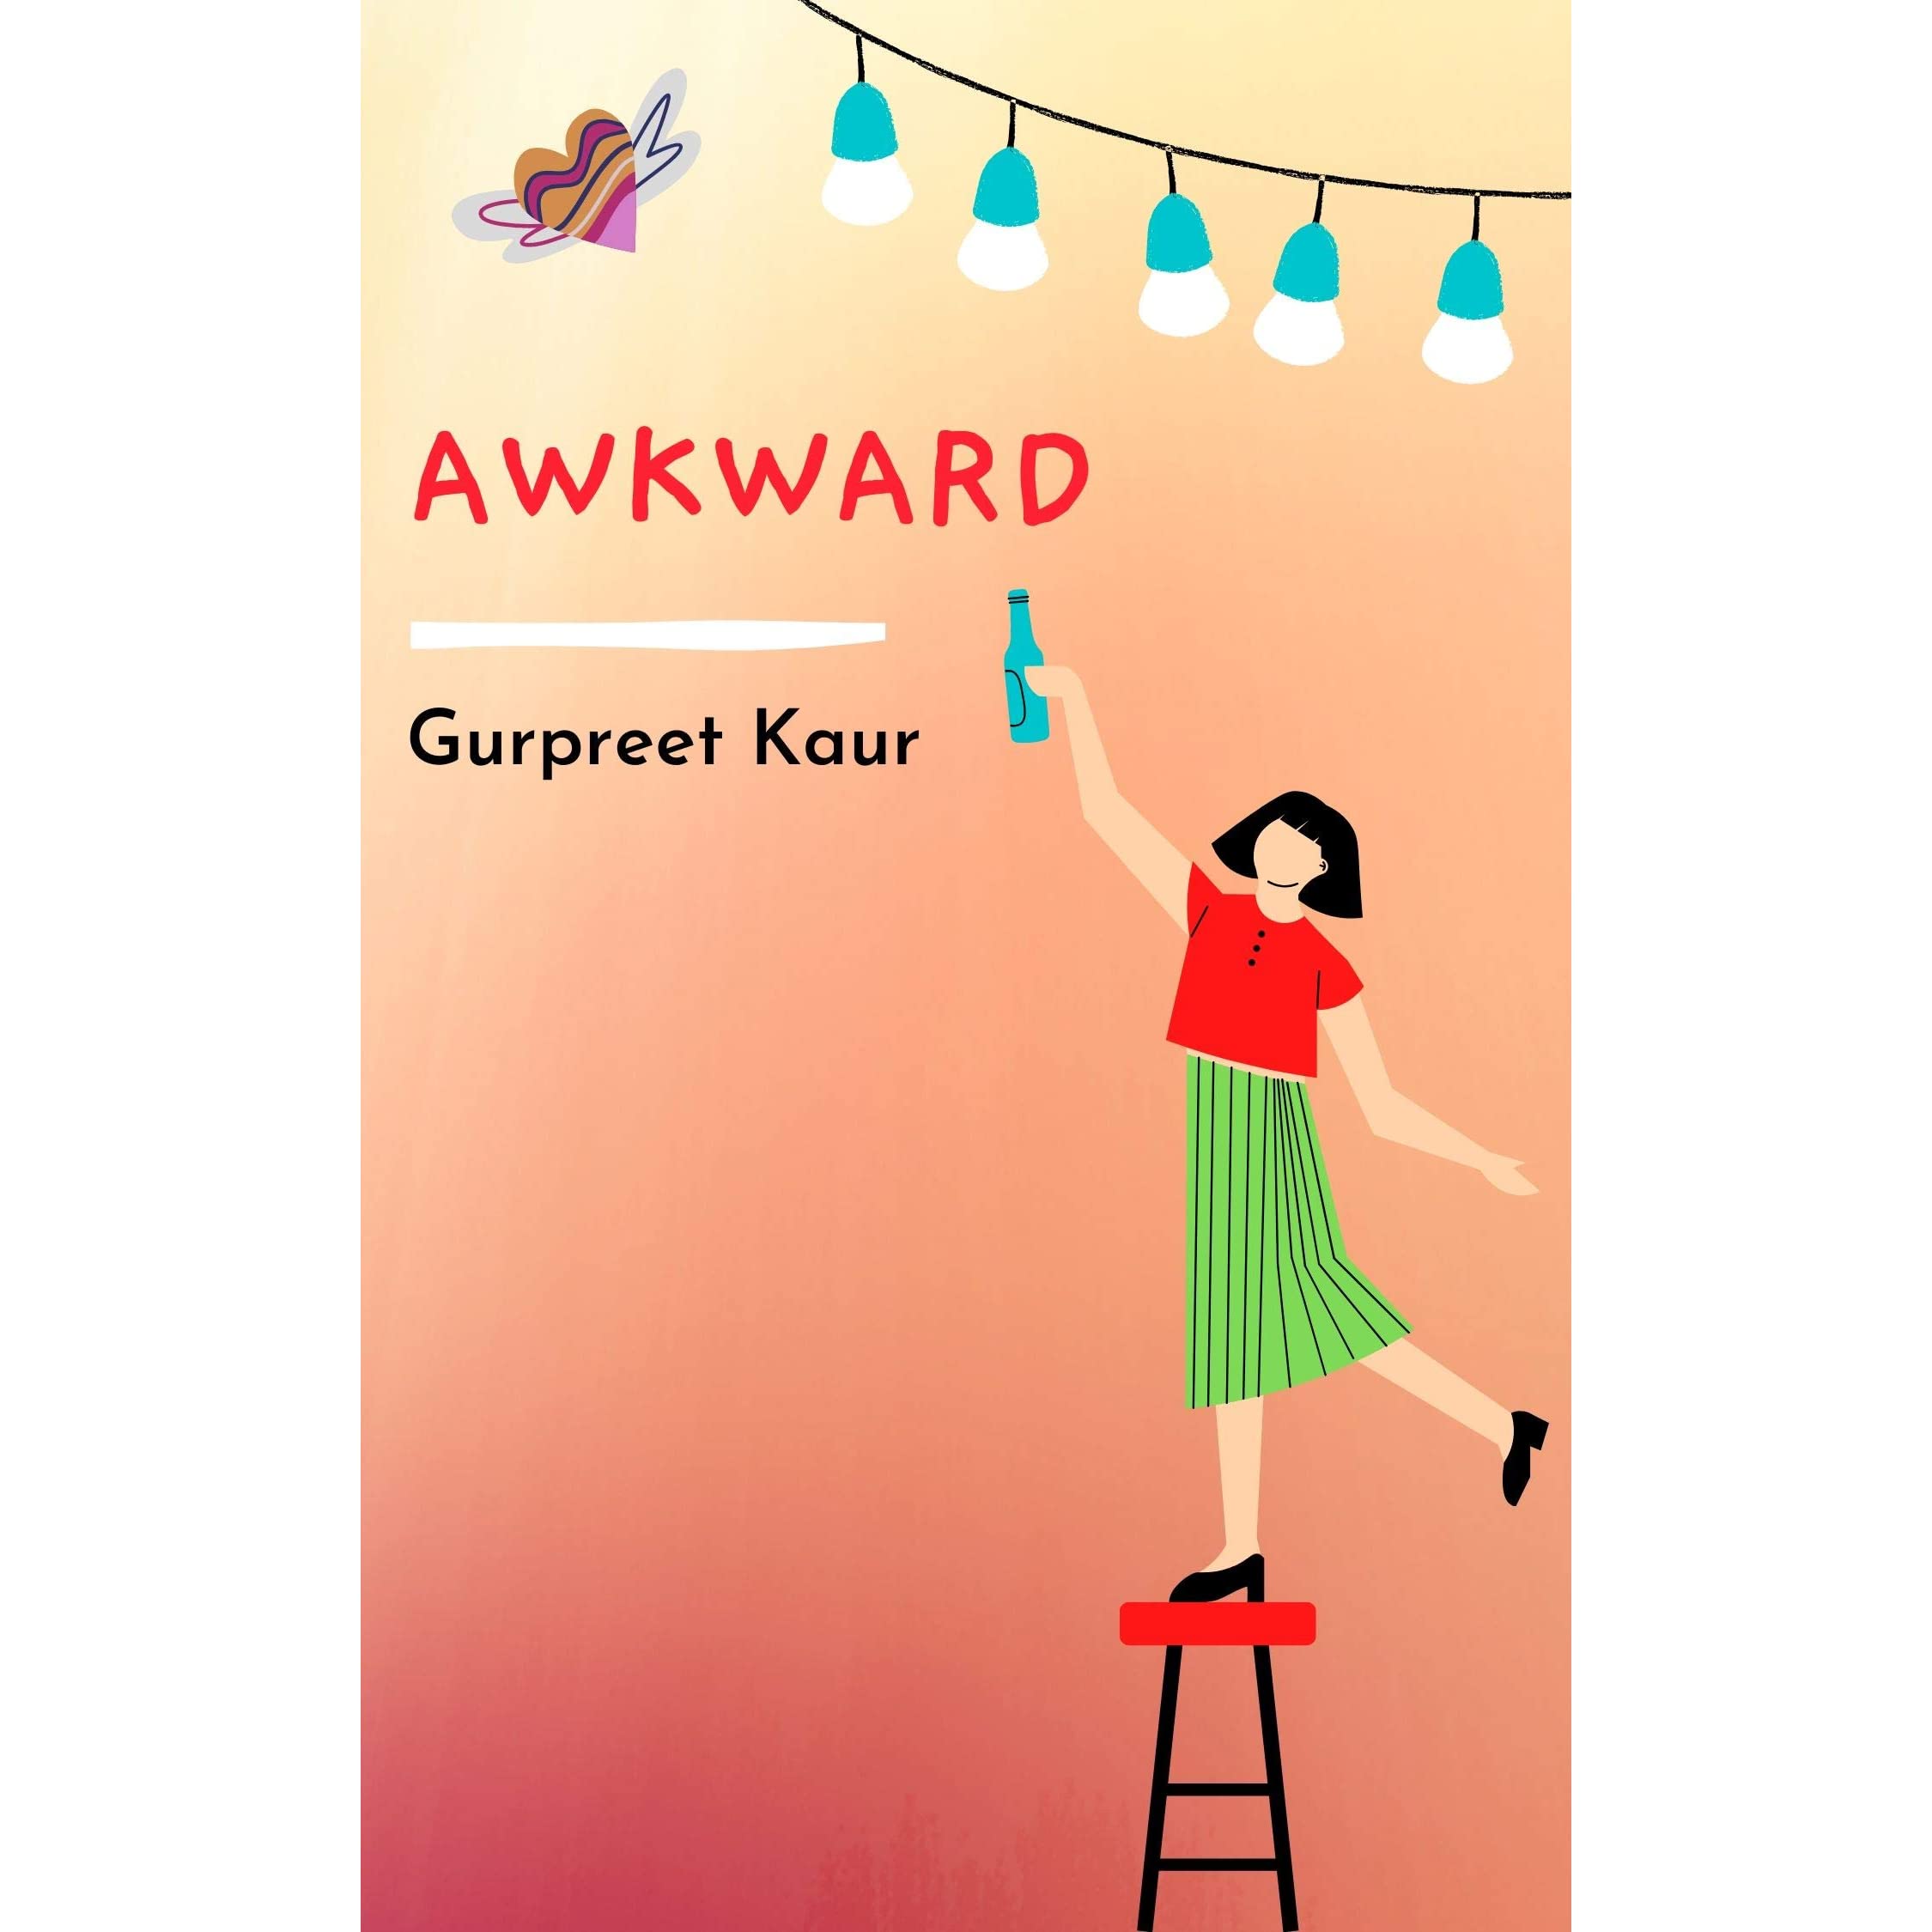 Book Review: “Awkward” by Gurpreet Kaur